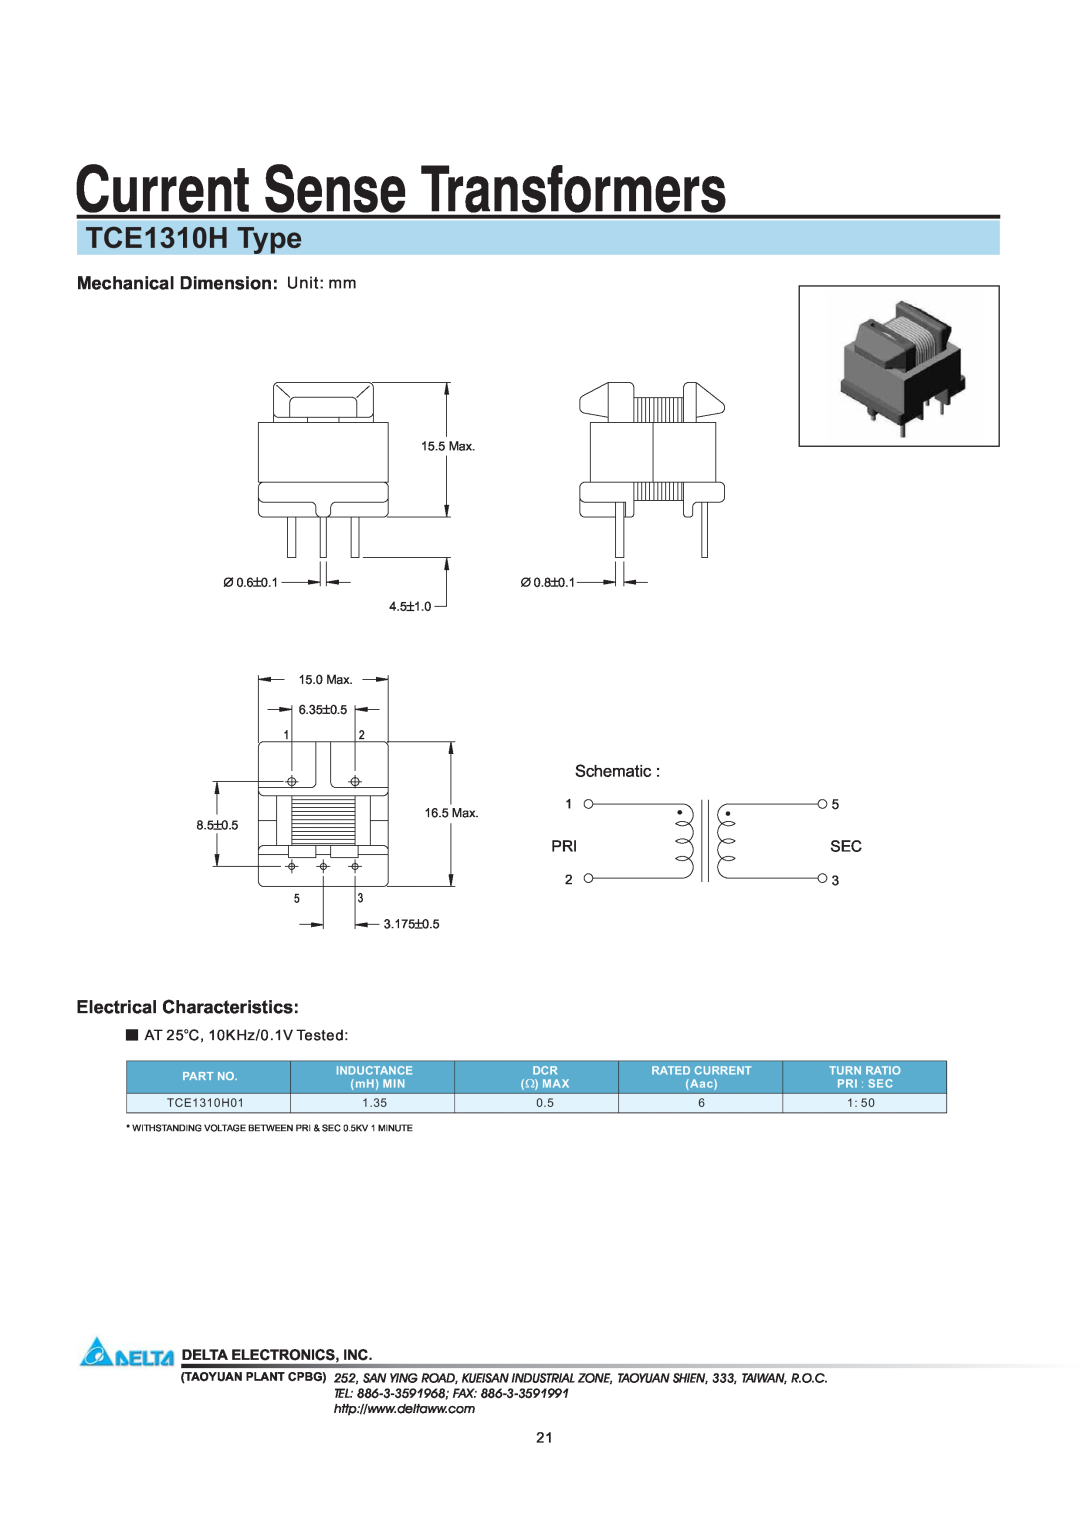 Delta Electronics manual Current Sense Transformers, TCE1310H Type, Mechanical Dimension Unit mm, Schematic, 15.5 Max 